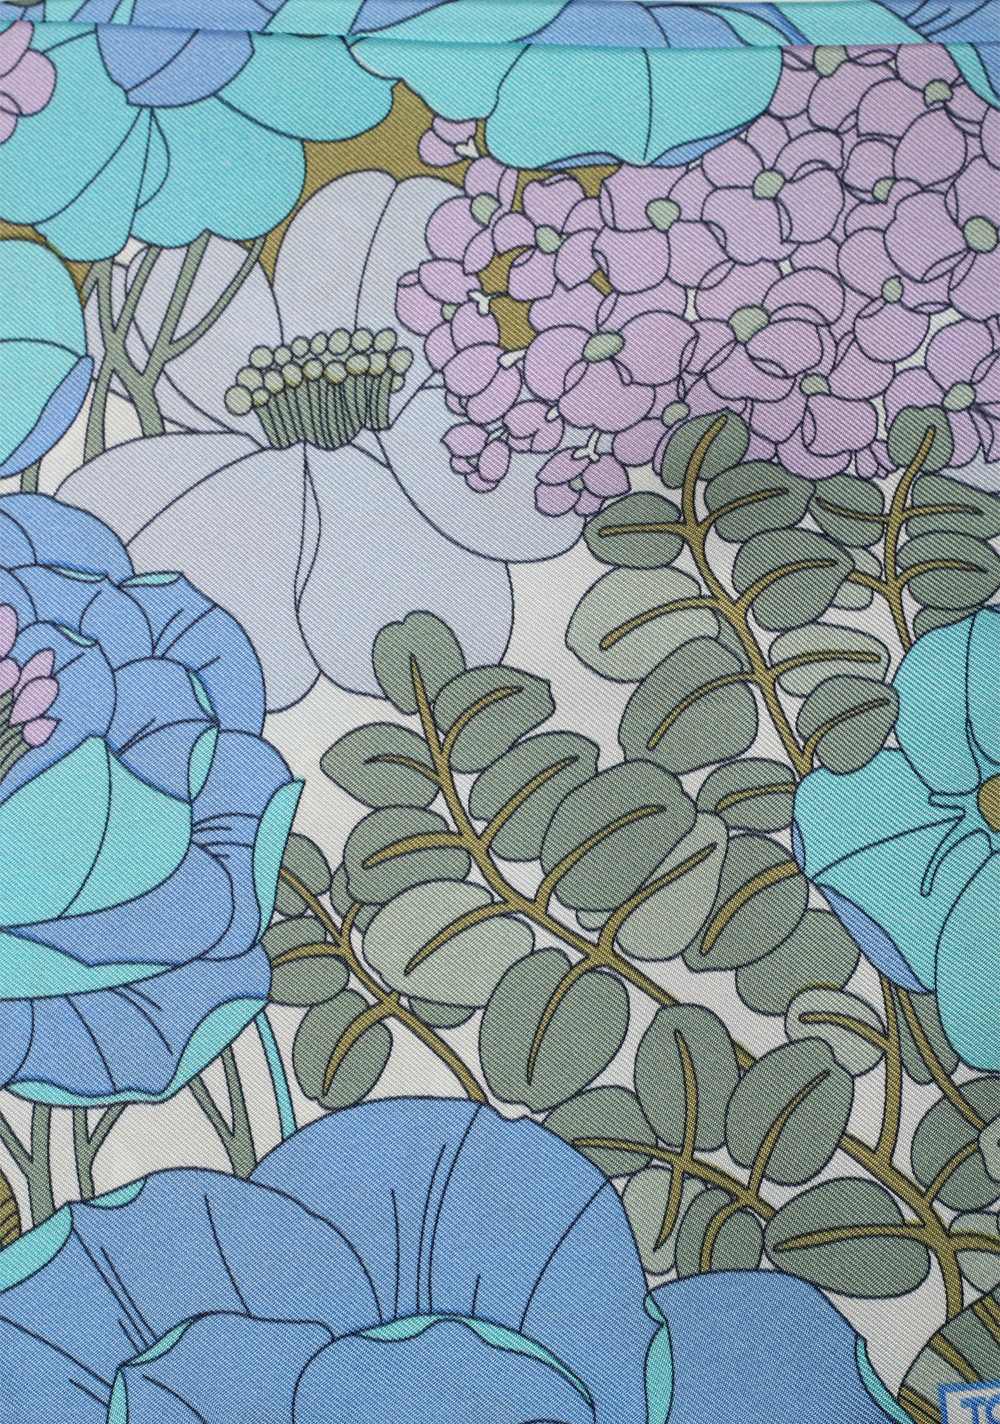 Tom Ford Blue Silk Pocket Square Floral Pattern 16″ x 16″ | Costume Limité